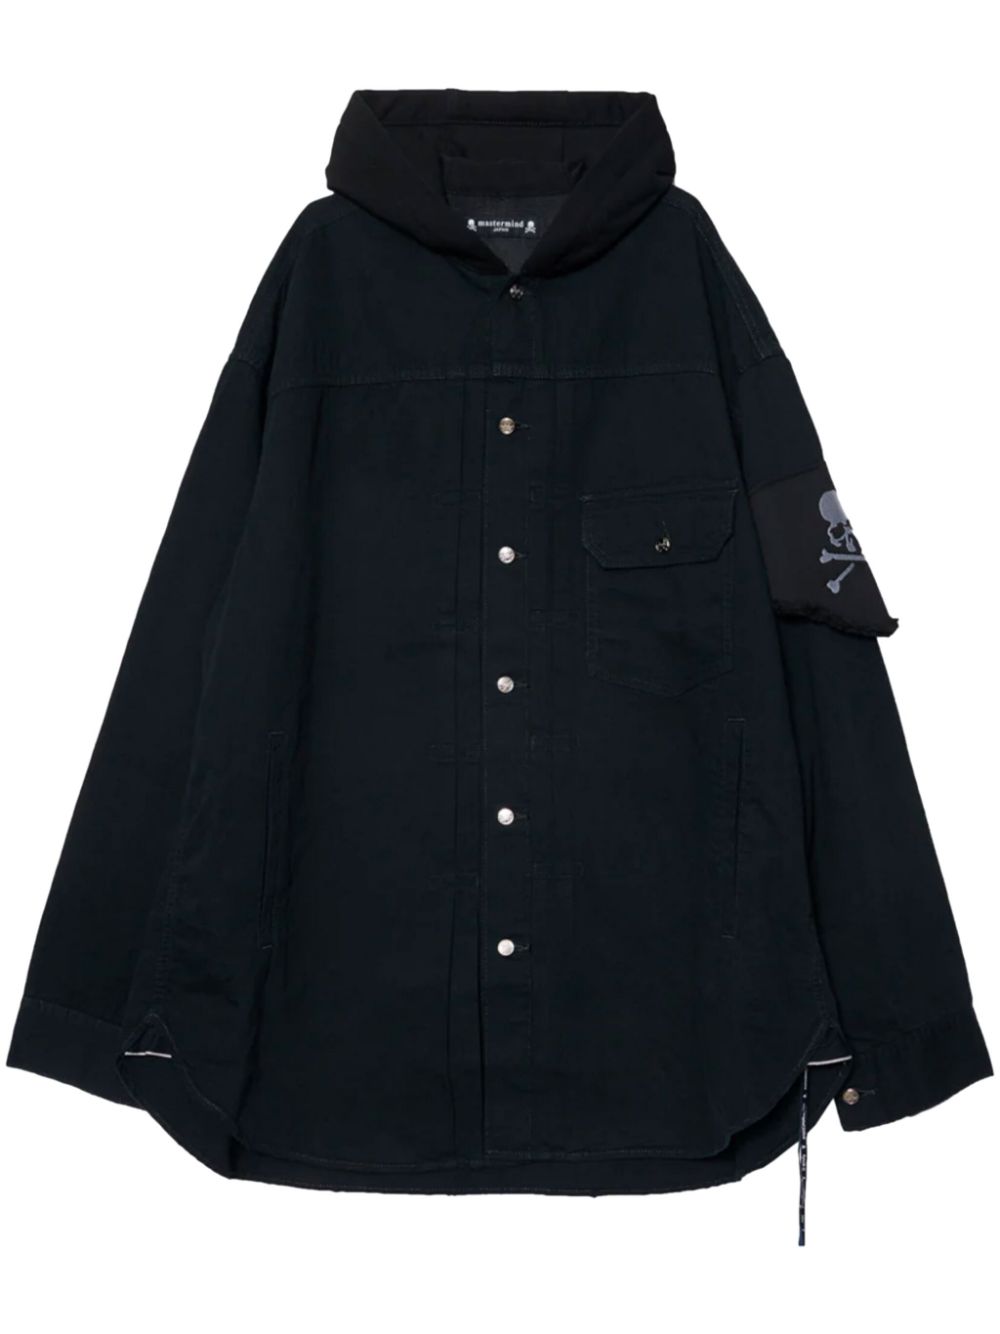 Mastermind Japan Hooded Denim Shirt In Black